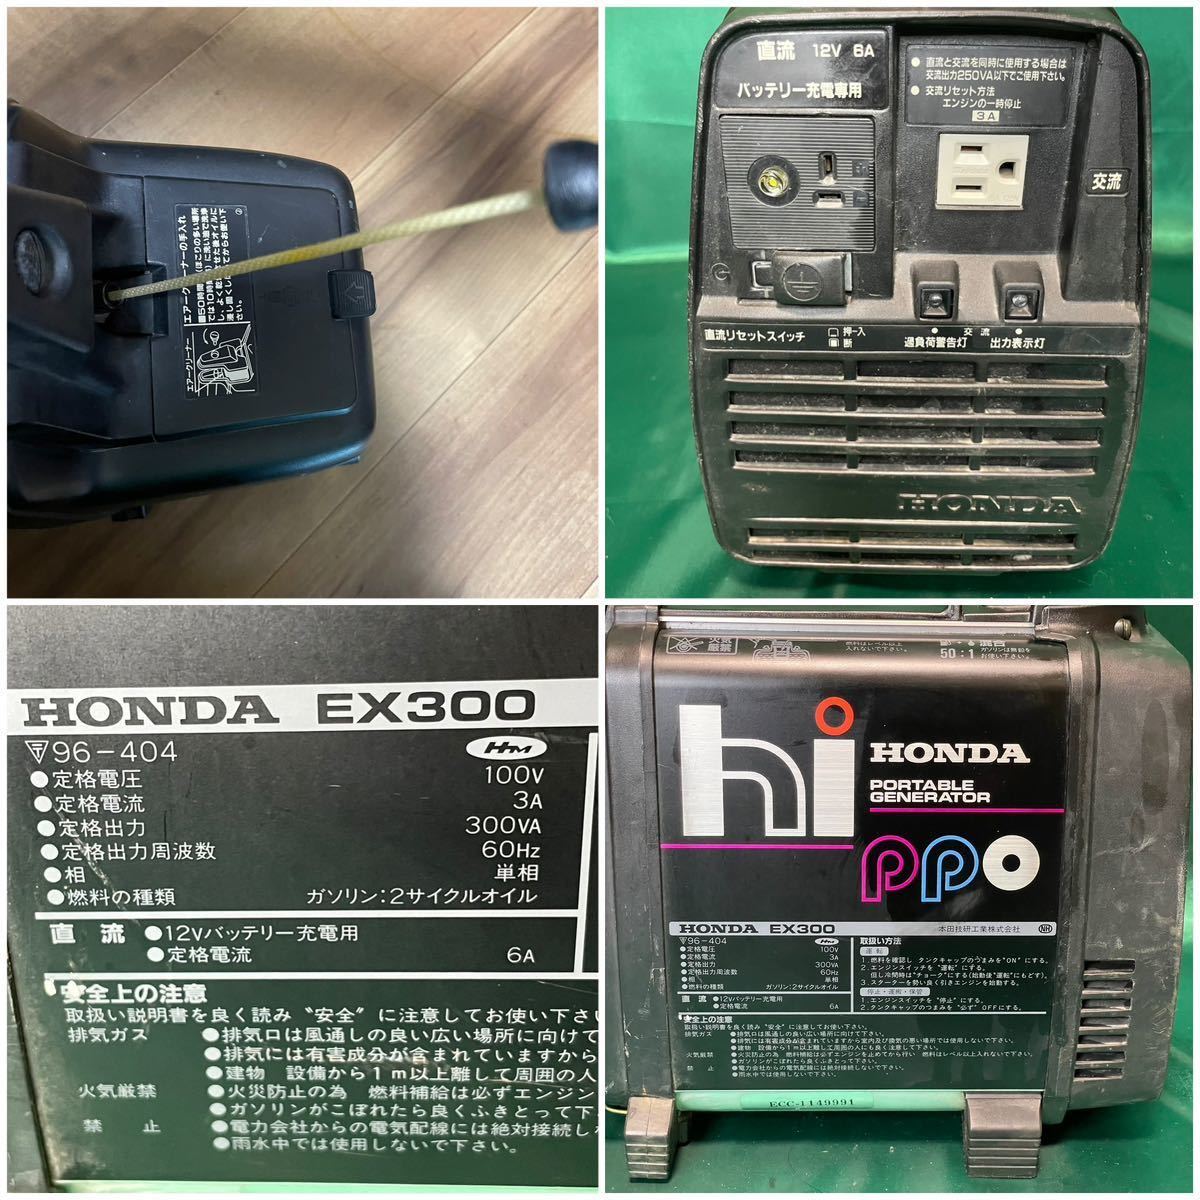 HONDA EX300 ホンダ ポータブル ジェネレーター インバーター 発電機 小型 コンパクト レジャー アウトドア 本田 hippo 300VA 直流12v 6A_画像10